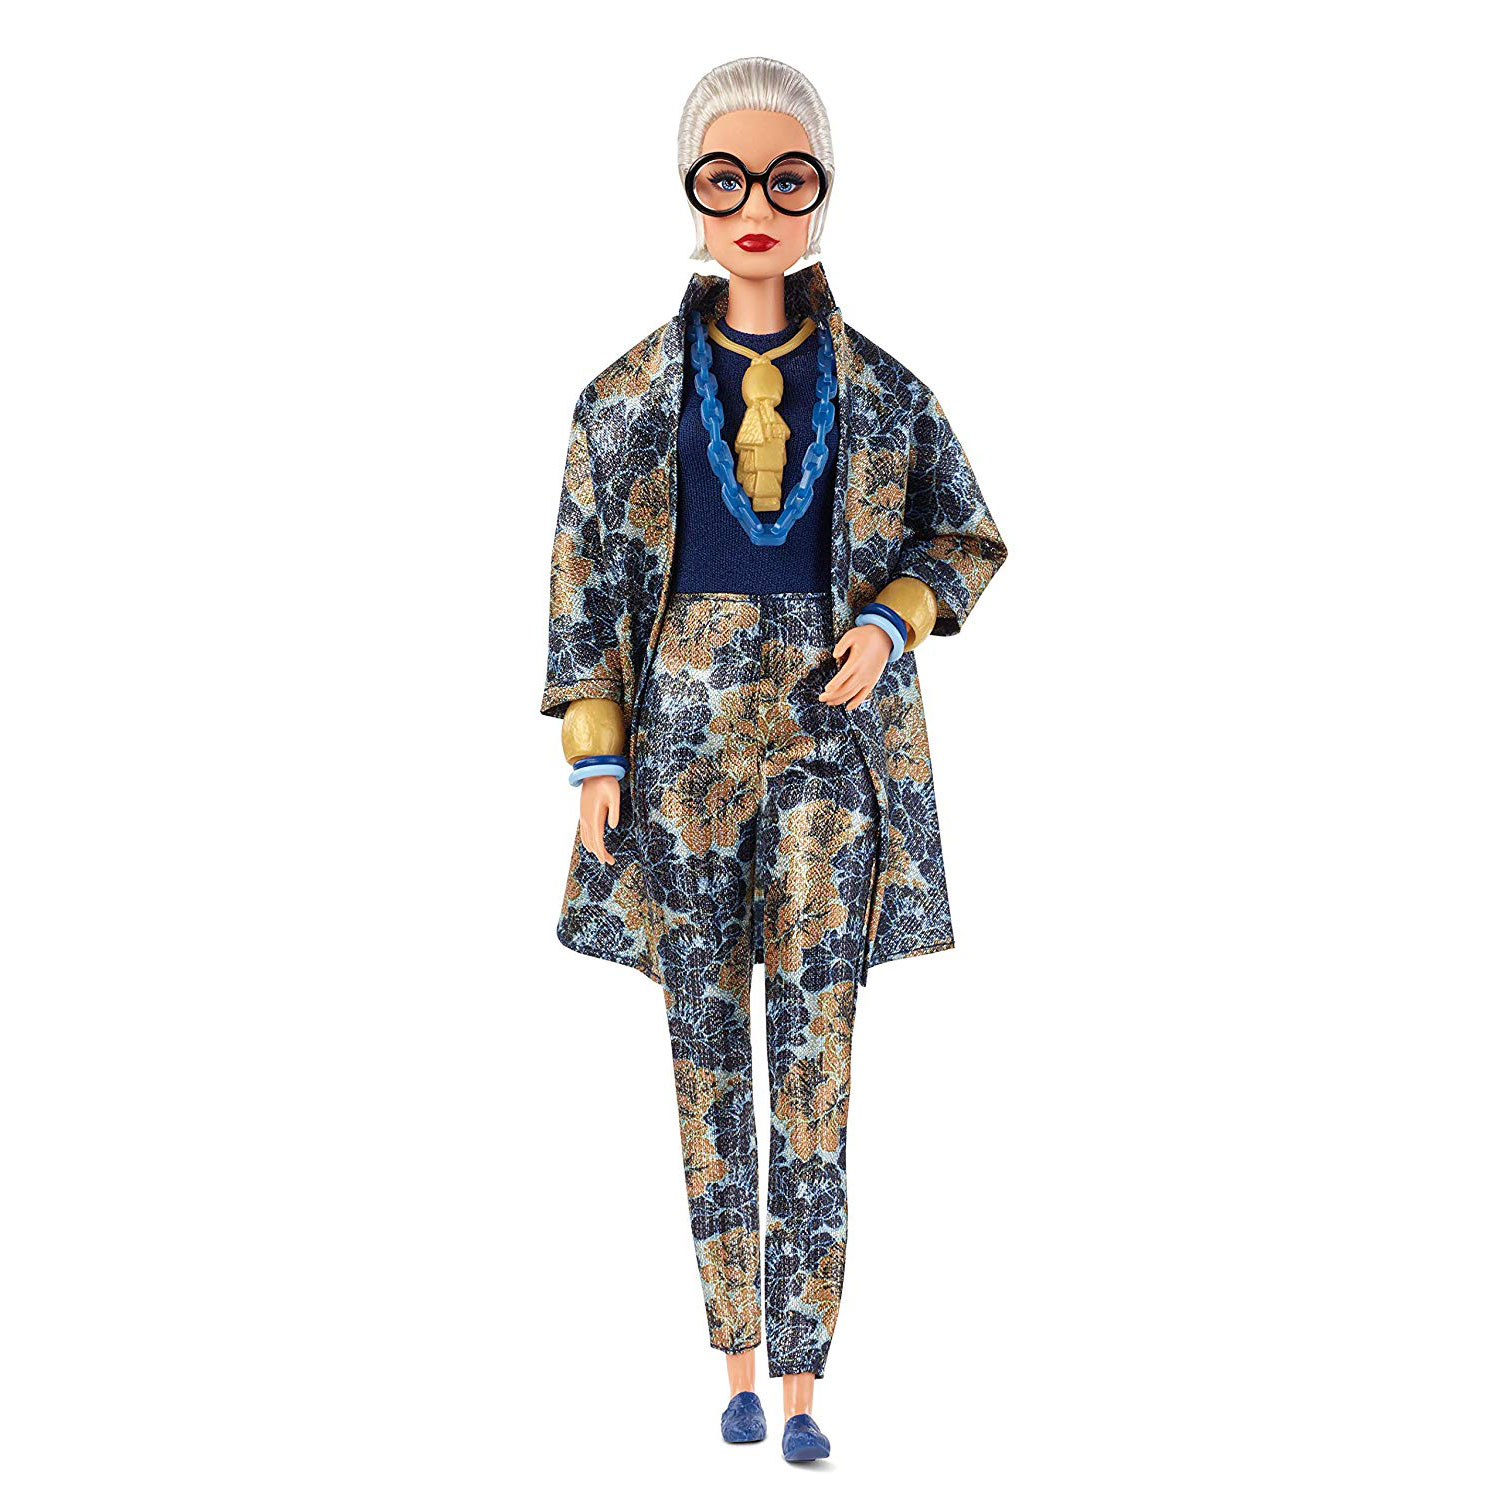 Mattel FWJ28 Barbie Styled by Designer Iris Apfel Doll Toy in Bodysuit